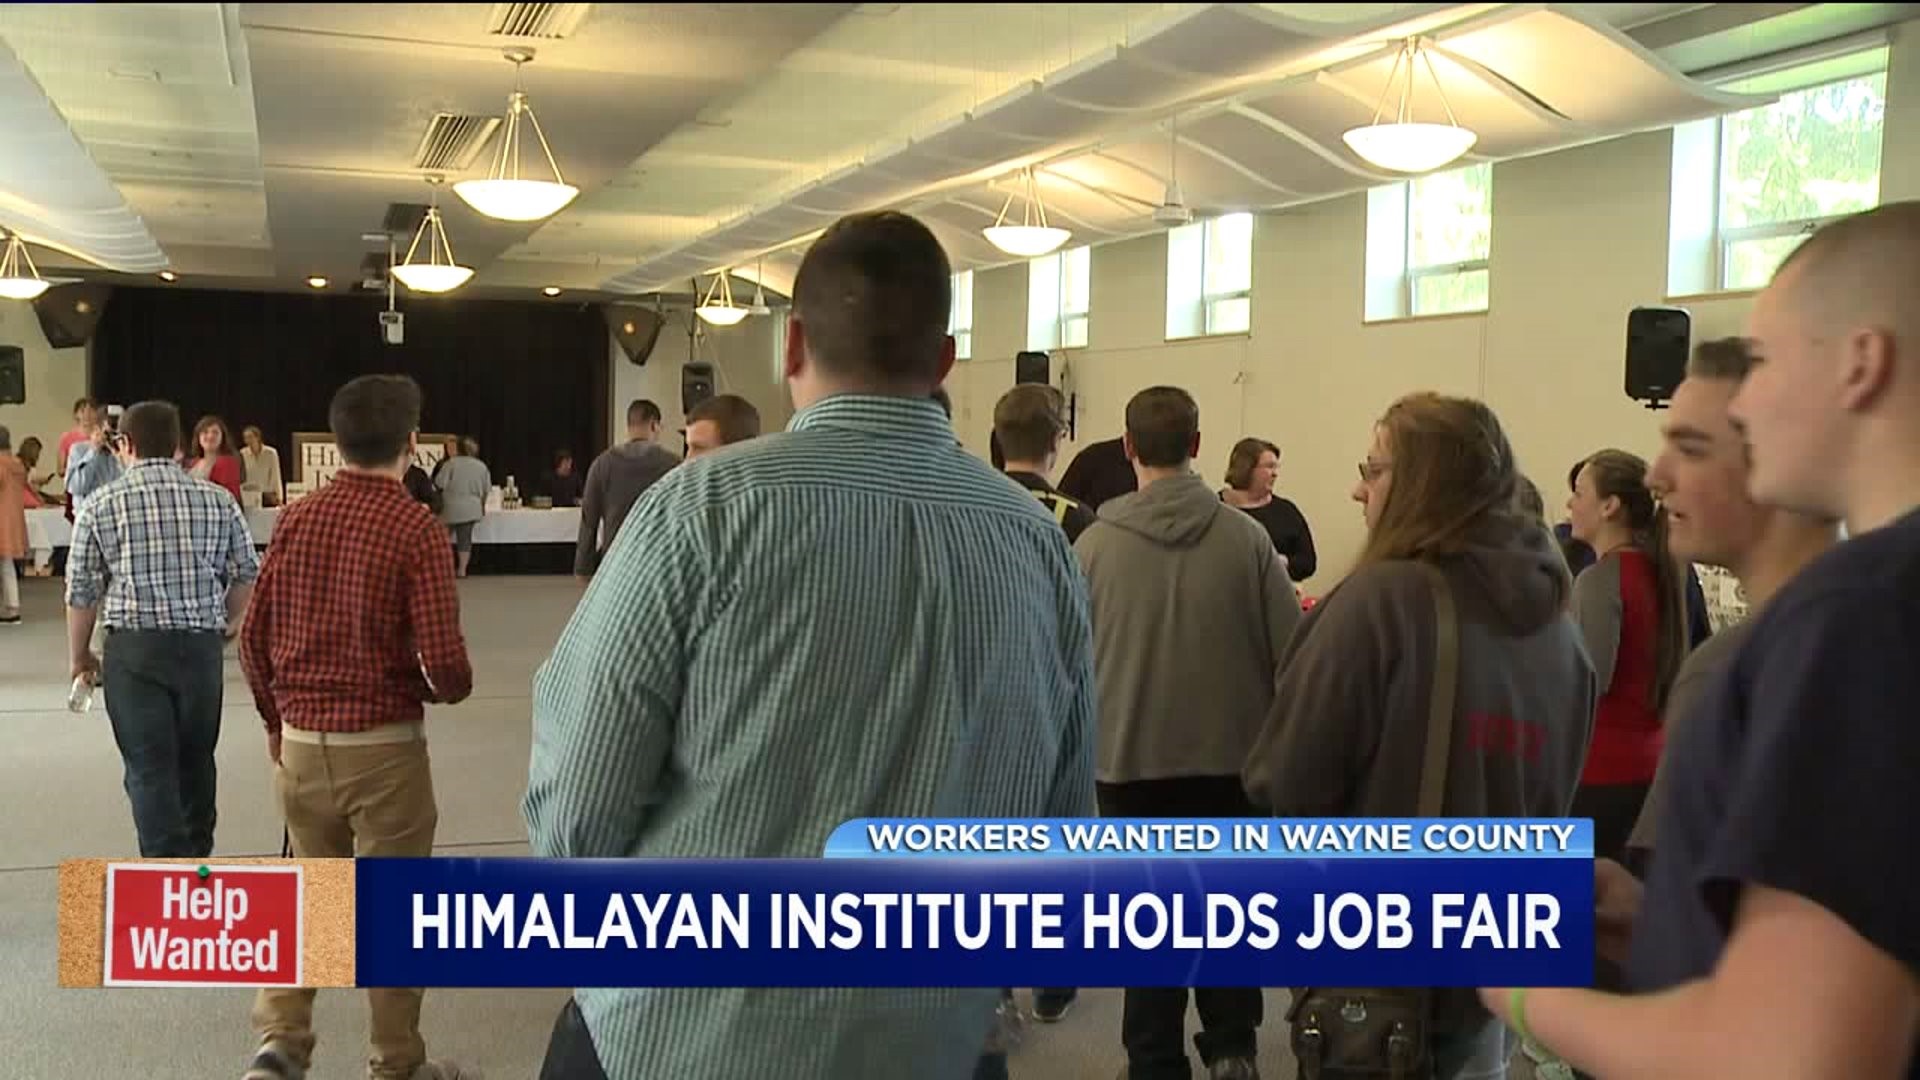 Looking for Work? Job Fair Hits Wayne County This Week